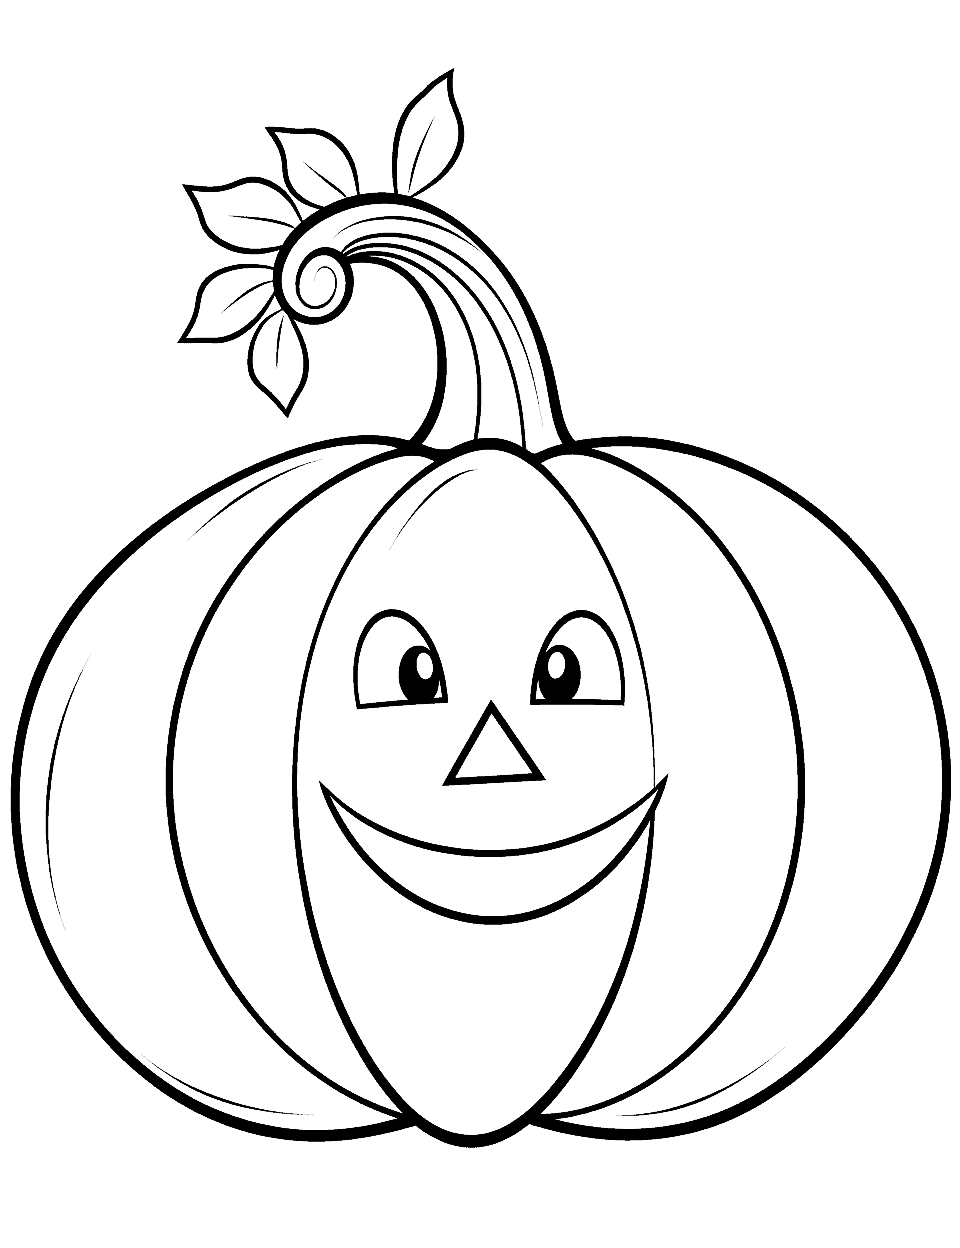 Kindergarten Pumpkin Fun Thanksgiving Coloring Page - A cute, basic pumpkin picture for kindergarten children to color.